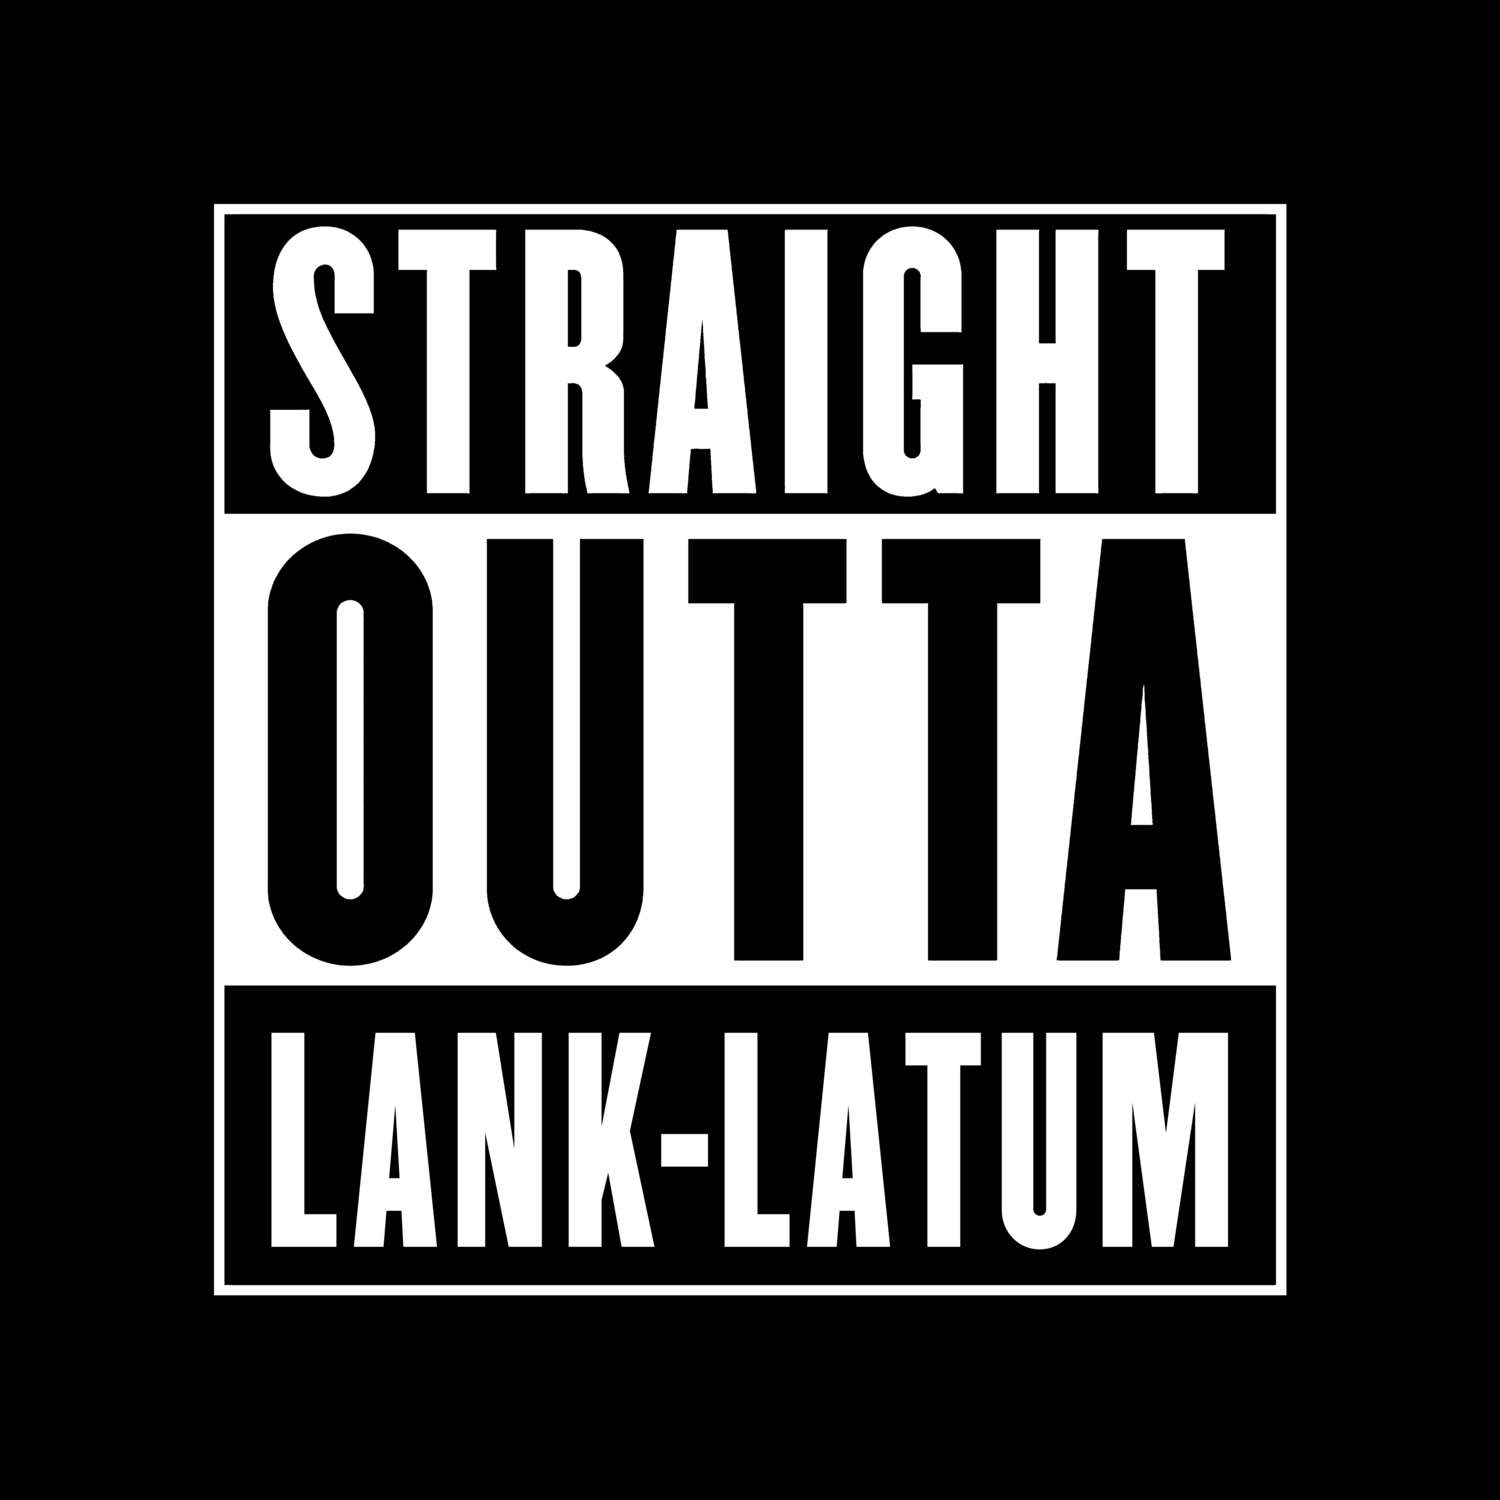 Lank-Latum T-Shirt »Straight Outta«